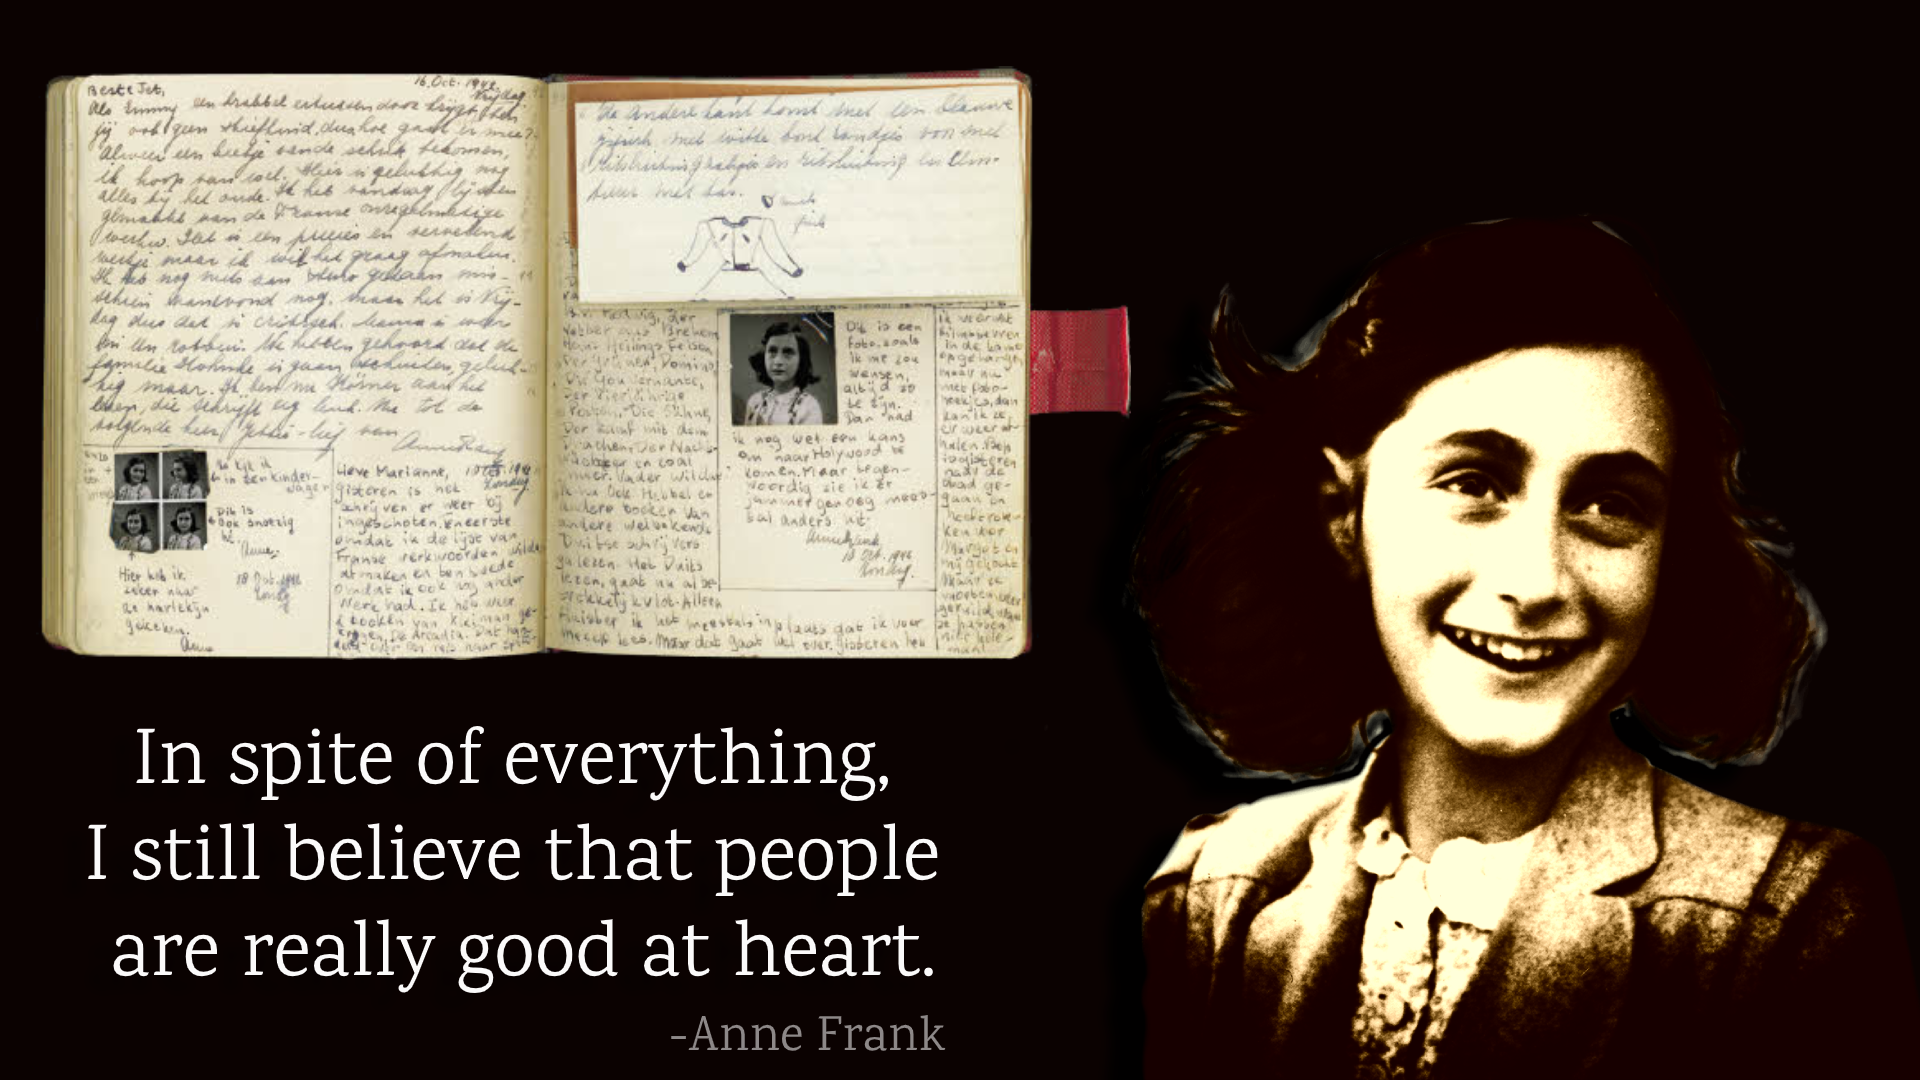 Anne Frank image